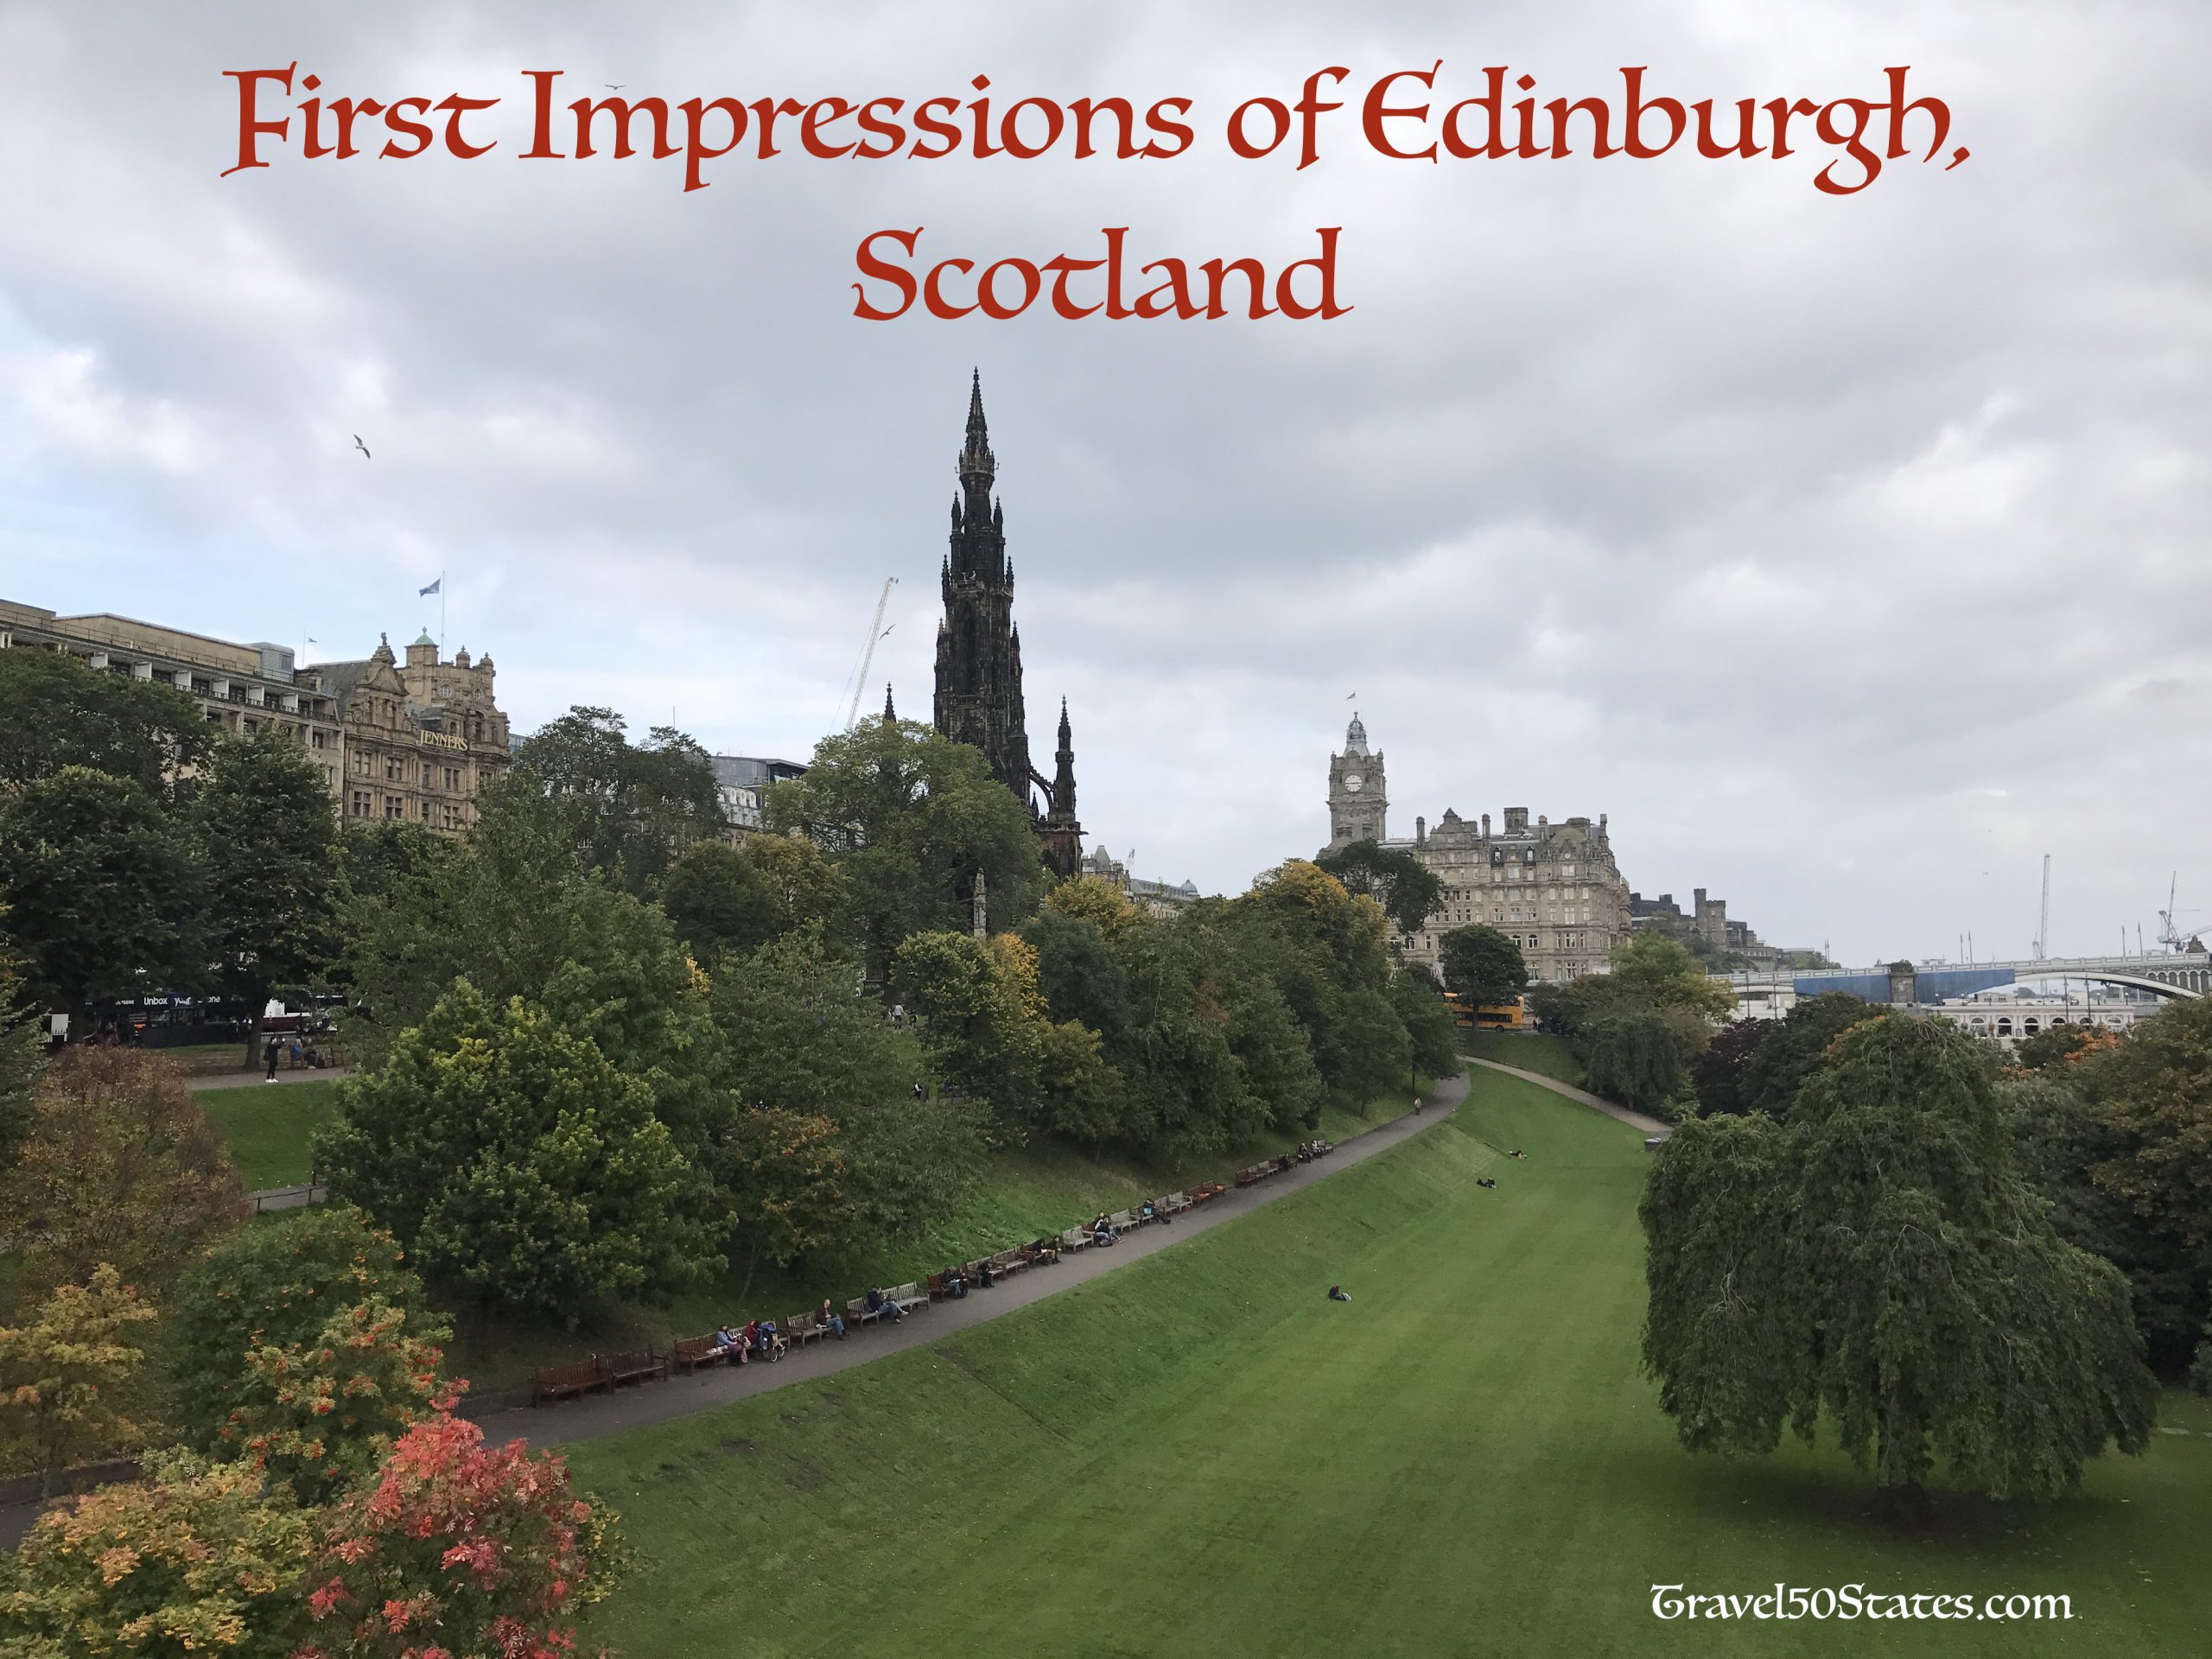 First Impressions of Edinburgh, Scotland